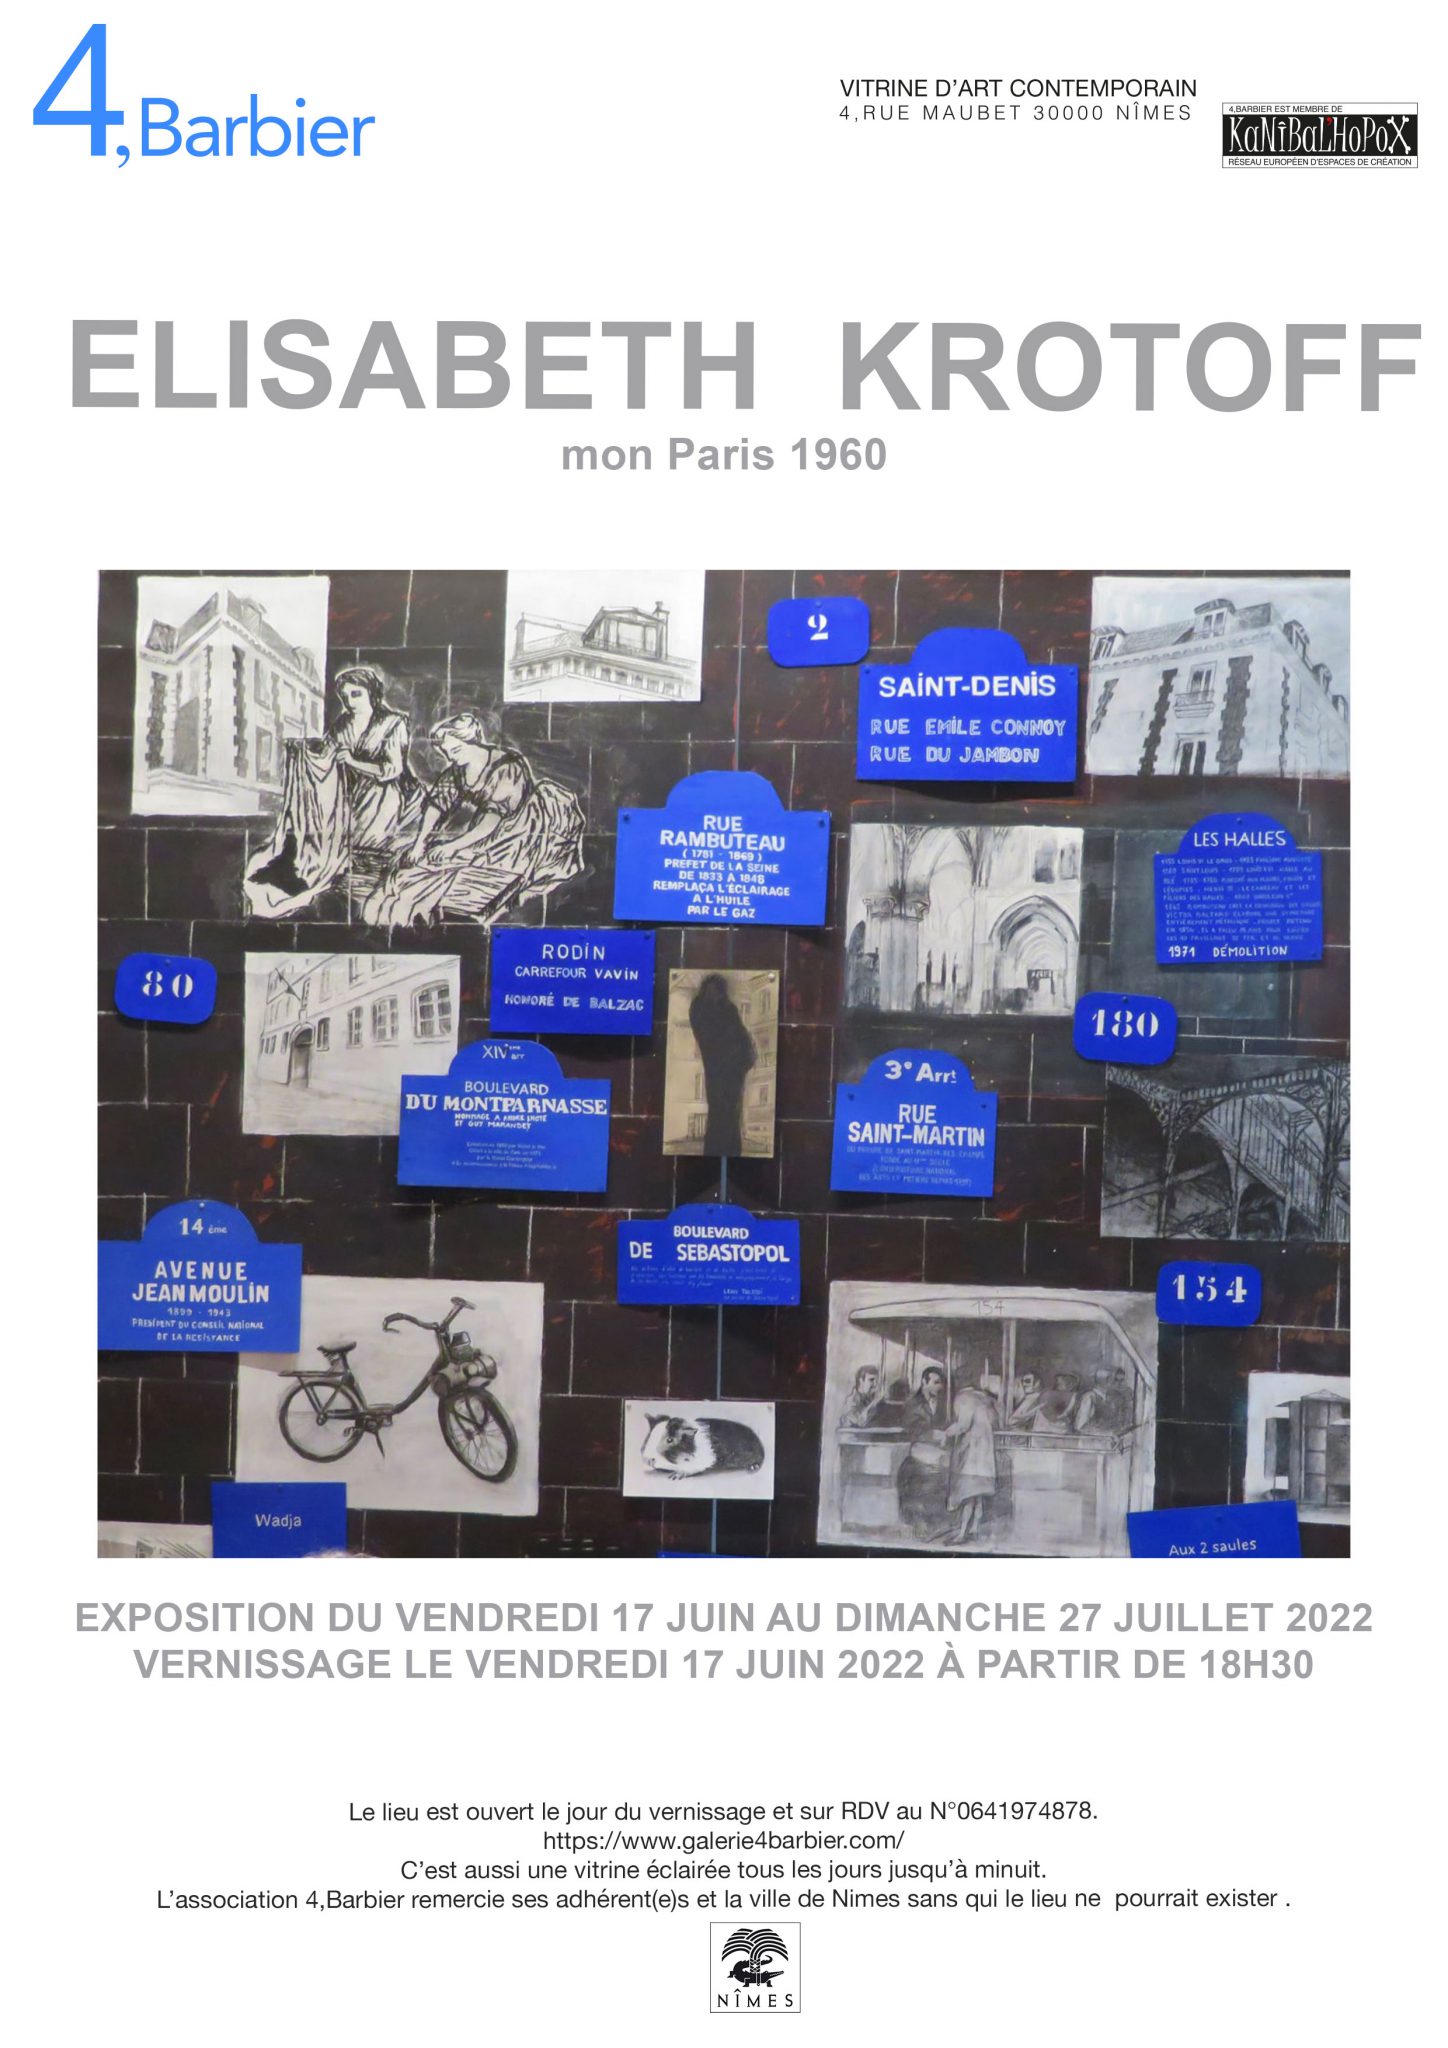 "Mon Paris 1960" Elisabeth KROTOFF